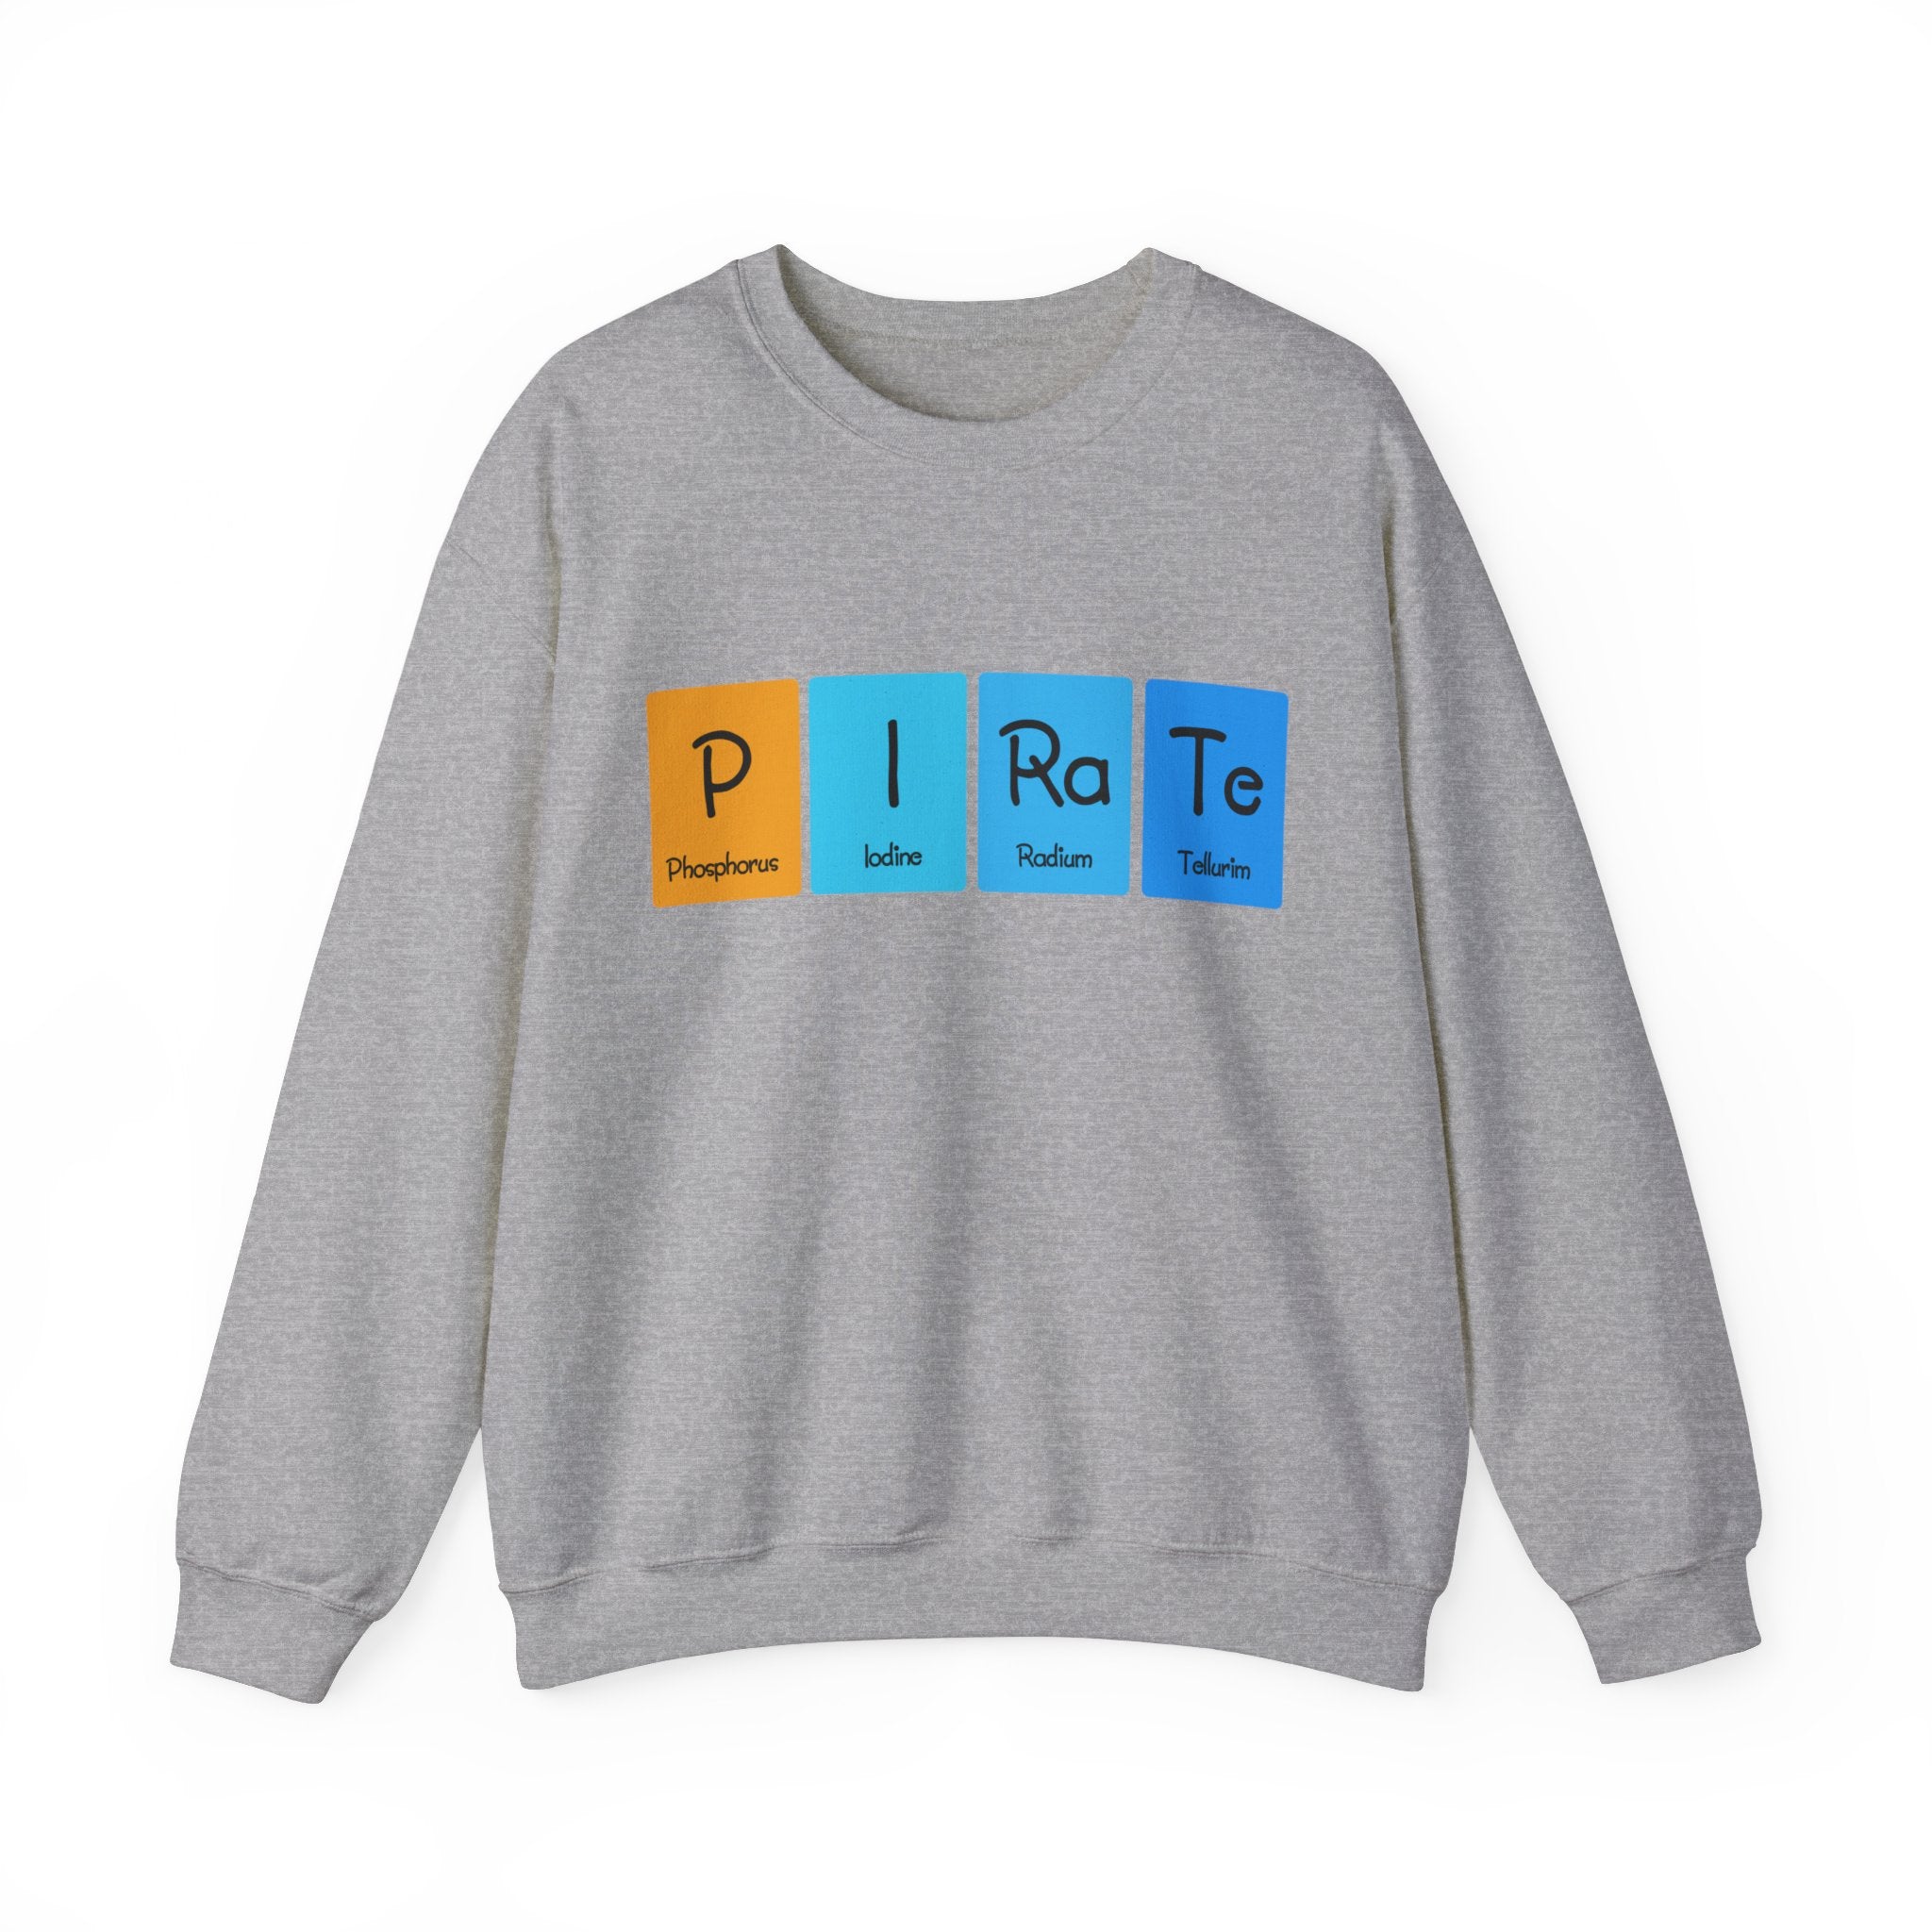 P-I-Ra-Te - Sweatshirt featuring a unique pirate design with the word "Pirate" spelled out using periodic table elements: Phosphorus (P), Iodine (I), Radium (Ra), and Tellurium (Te).